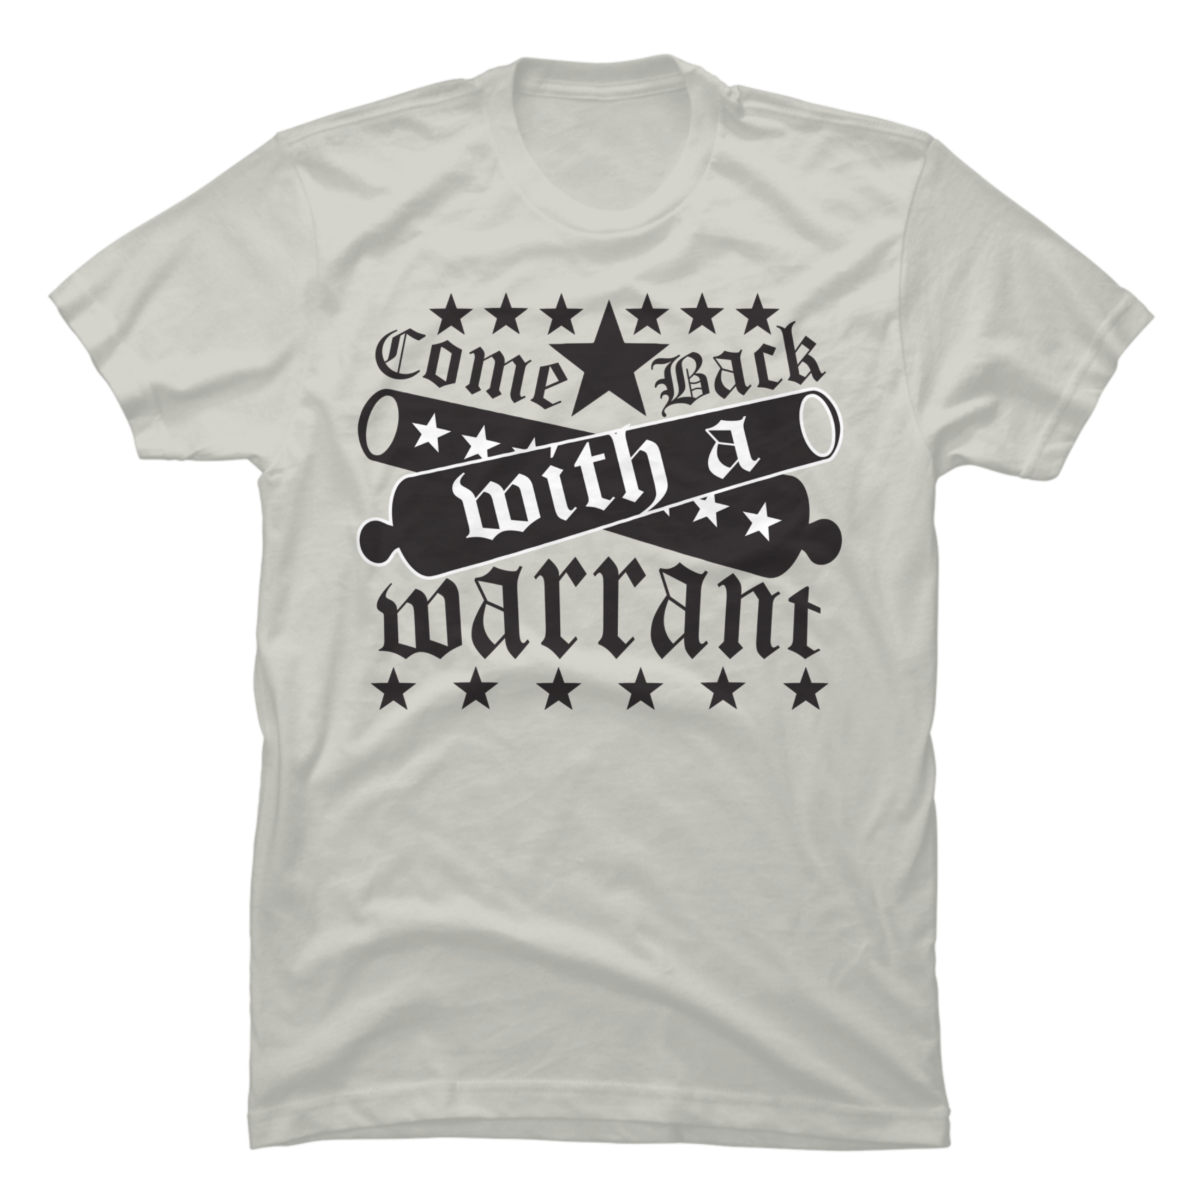 warrant t shirt